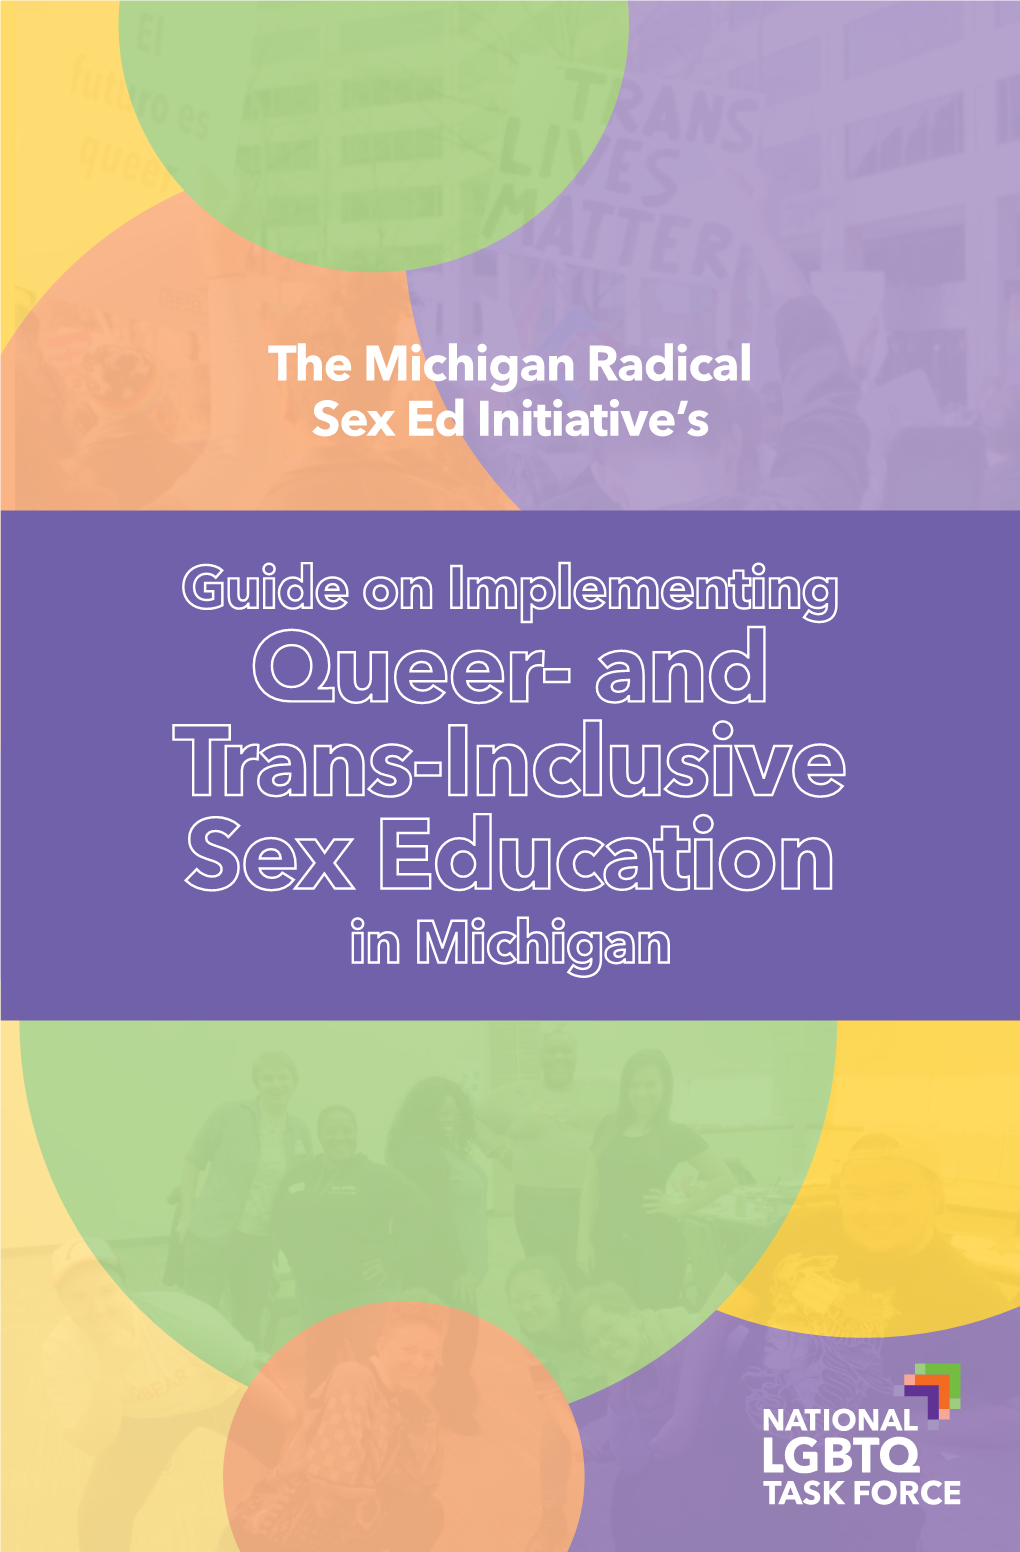 The Michigan Radical Sex Ed Initiative's